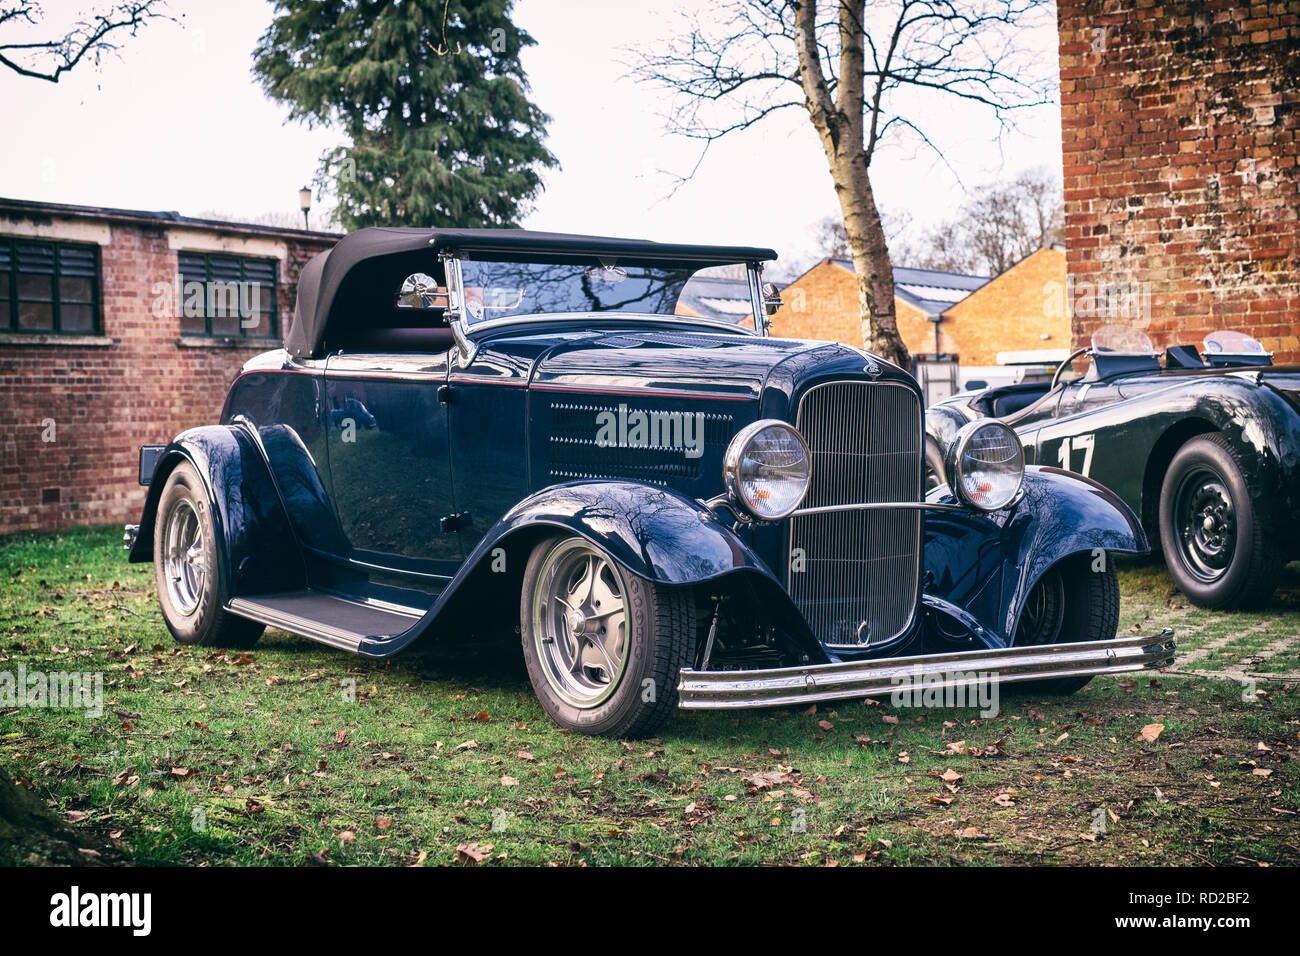 1932 Ford custom convertible voiture à Bicester Heritage Centre. L'Oxfordshire, Angleterre. Vintage filtre appliqué Banque D'Images